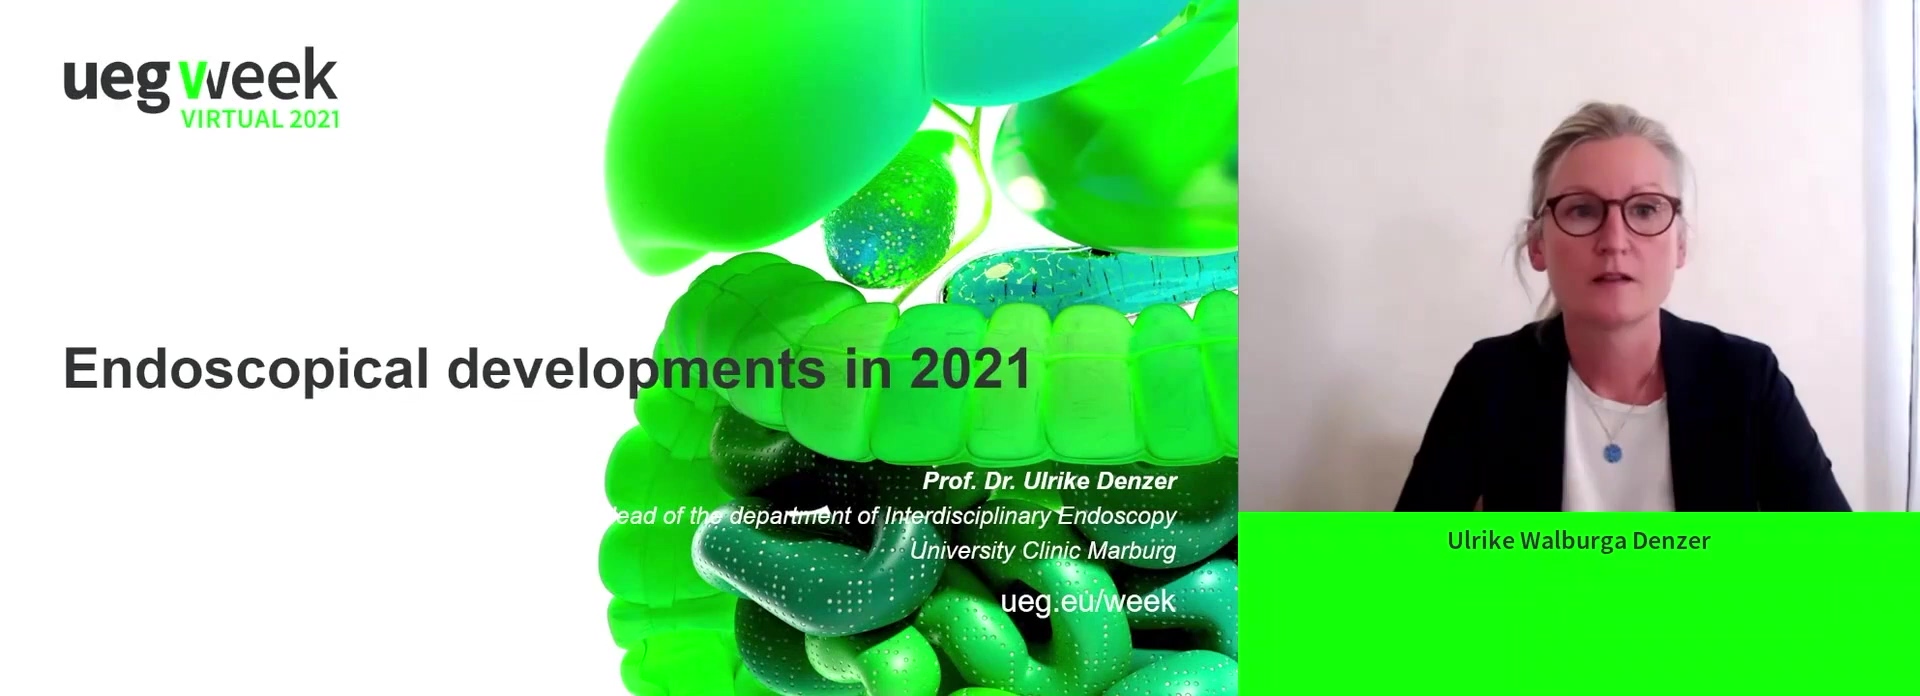 Endoscopical developments in 2021